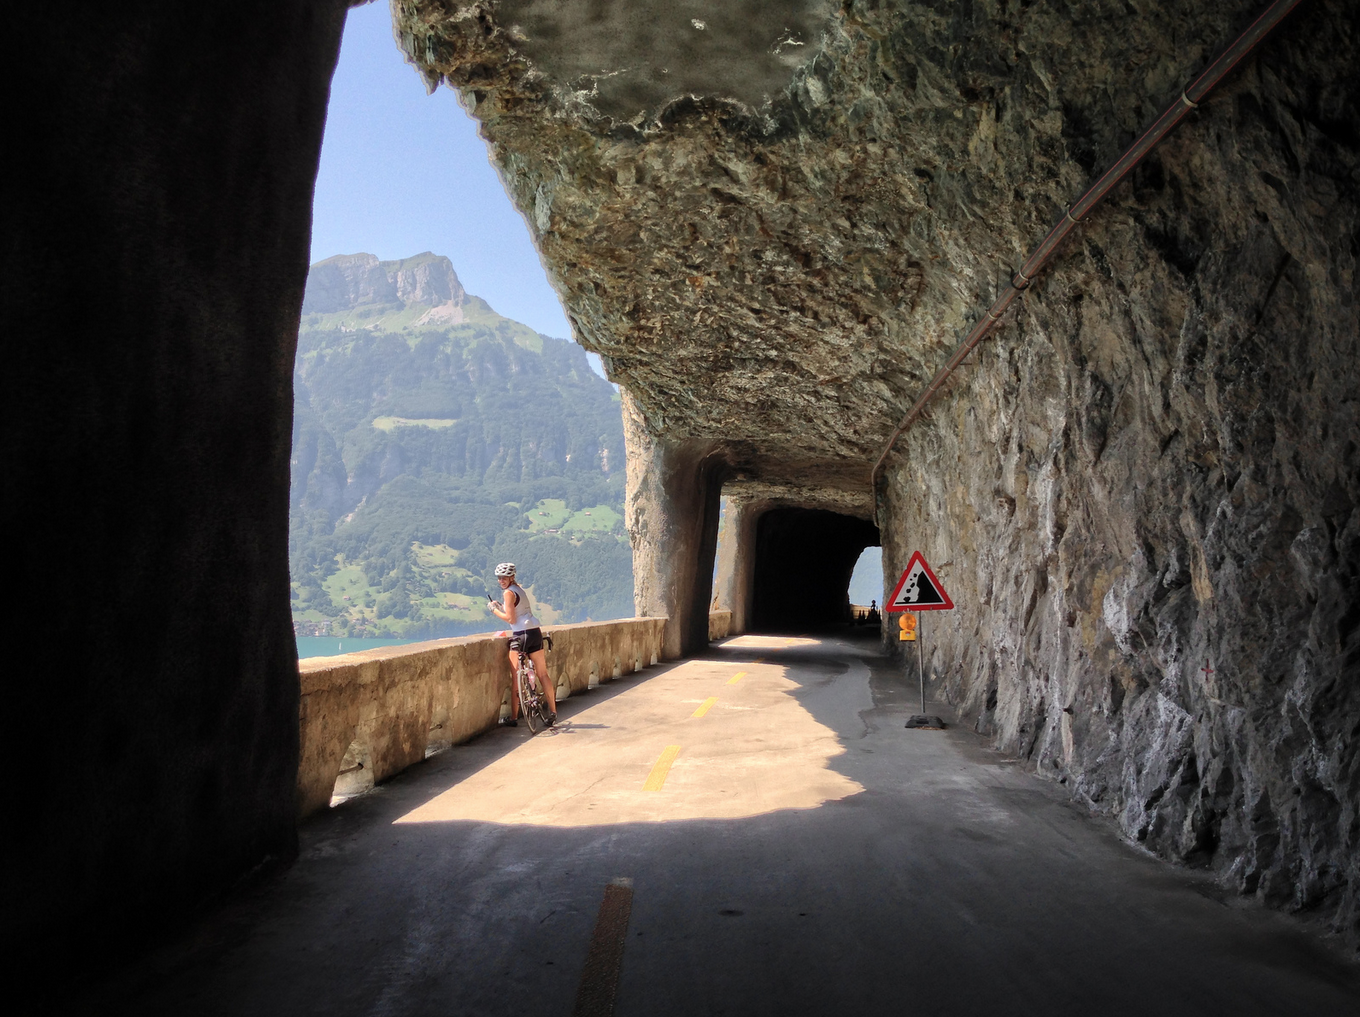 Bike path Lake Lucerne, Switzerland.